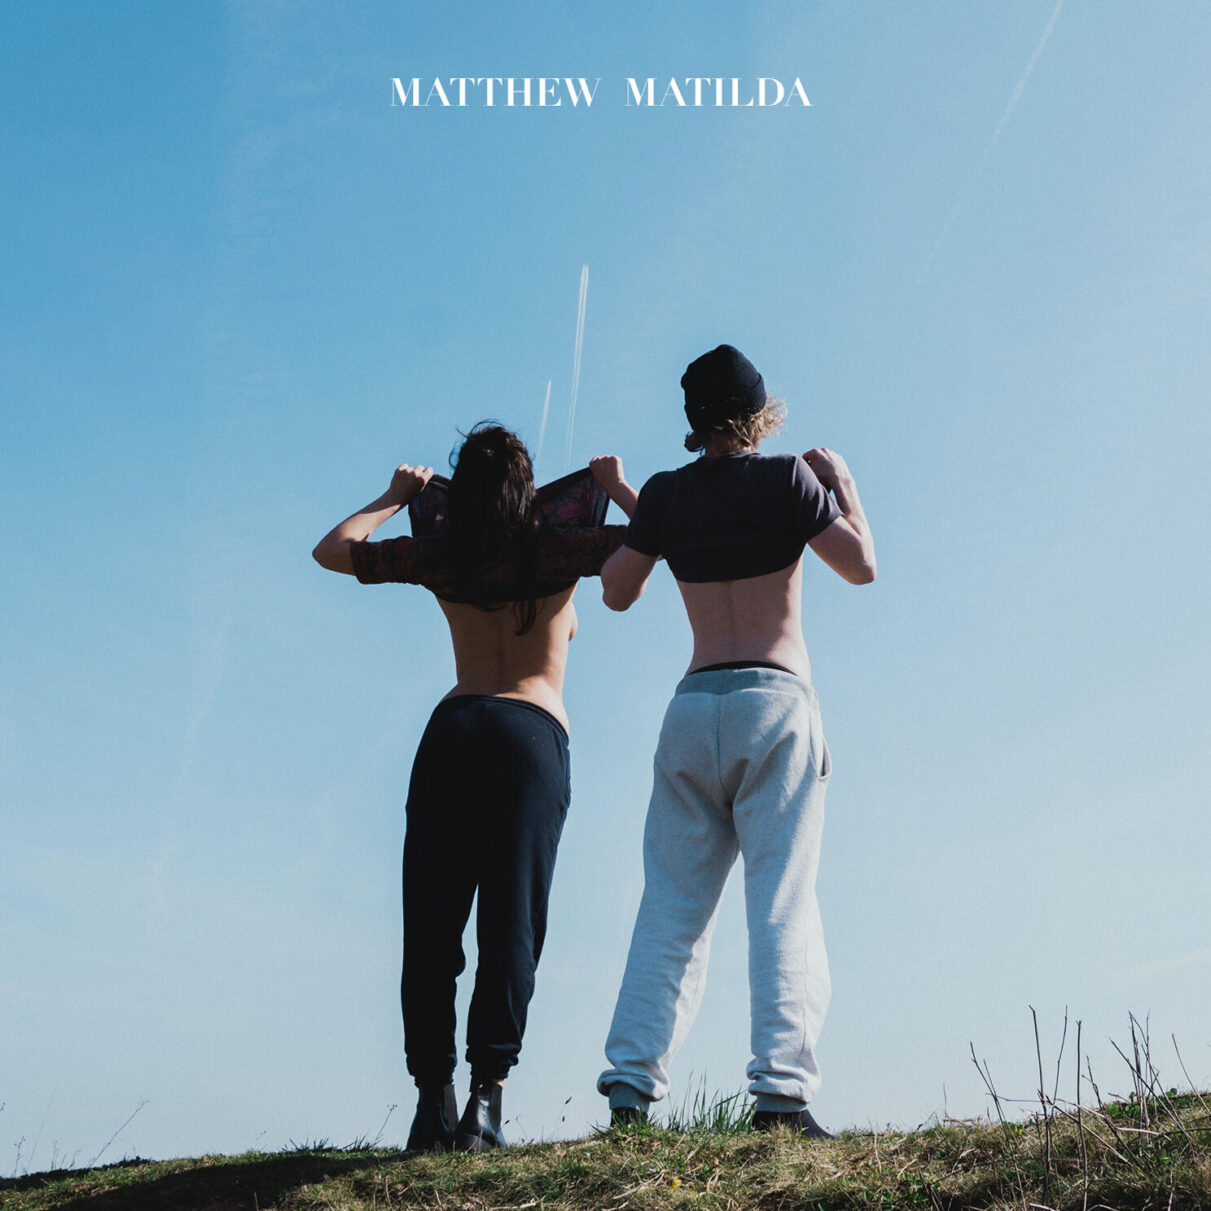 Matthew Matilda